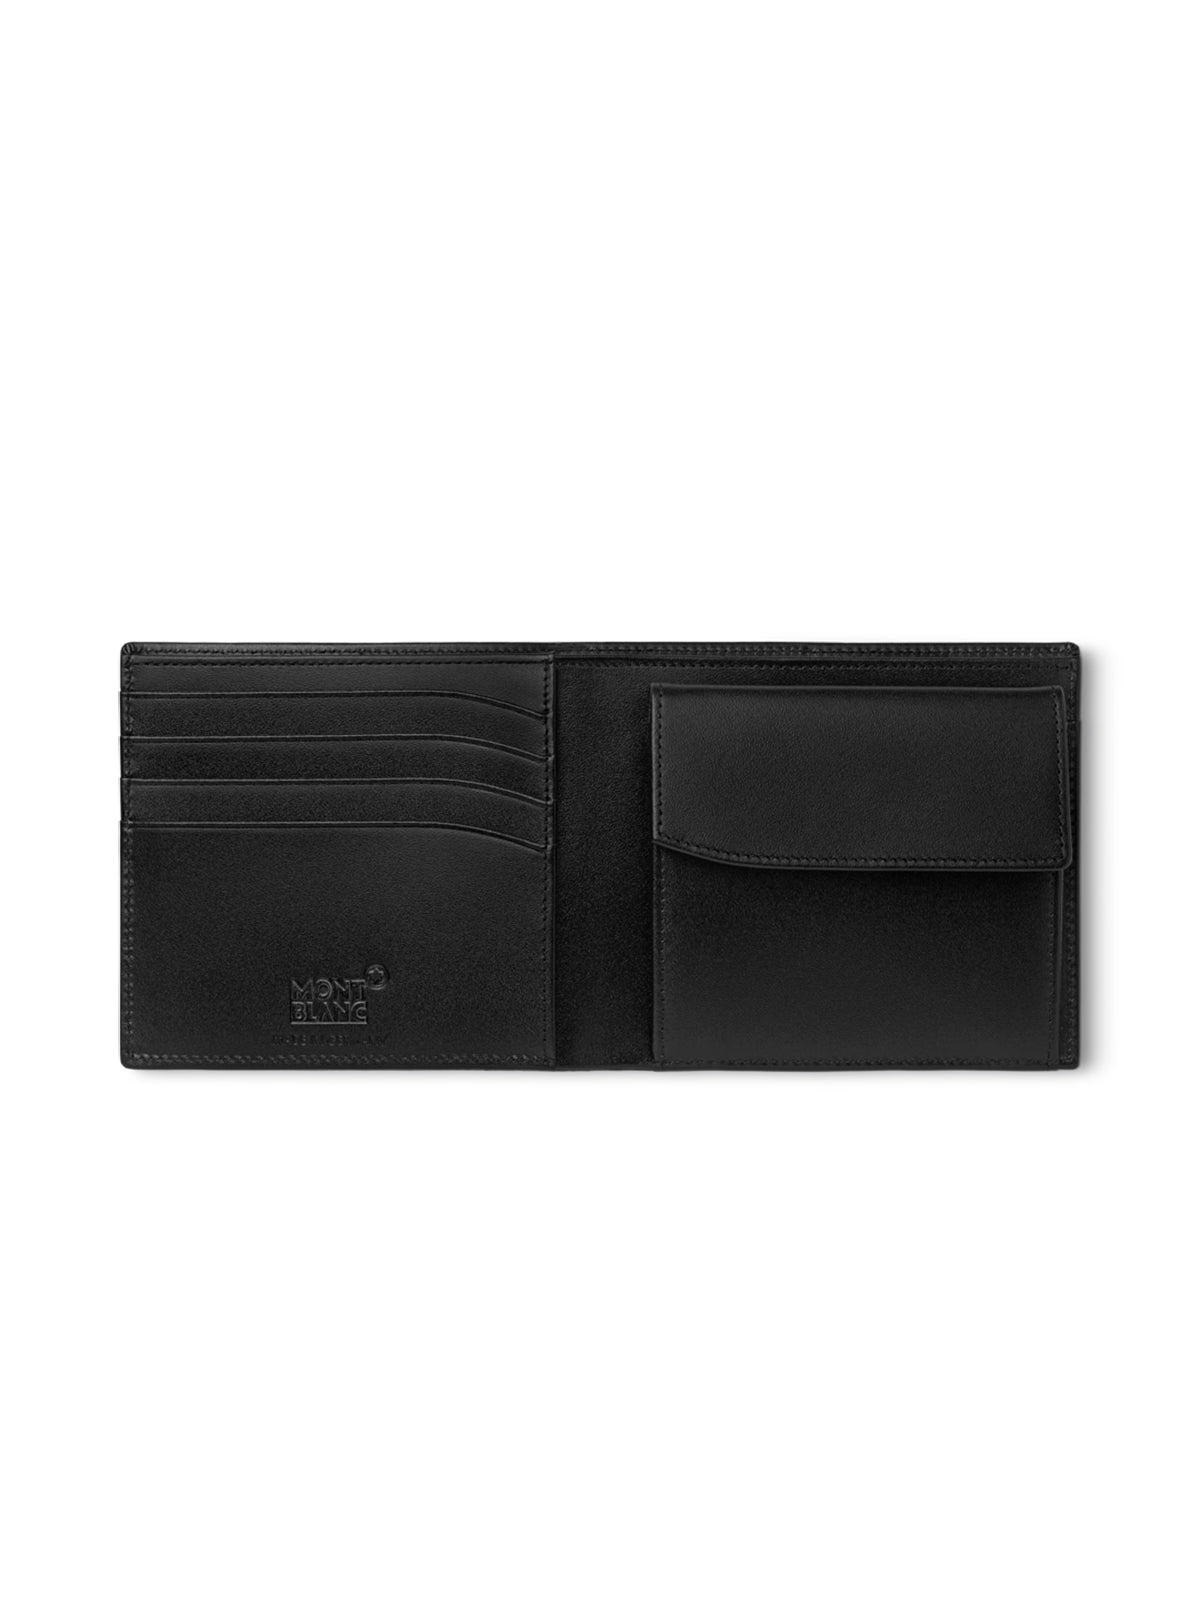 Montblanc Meisterstuck Black Leather Wallet MB7164